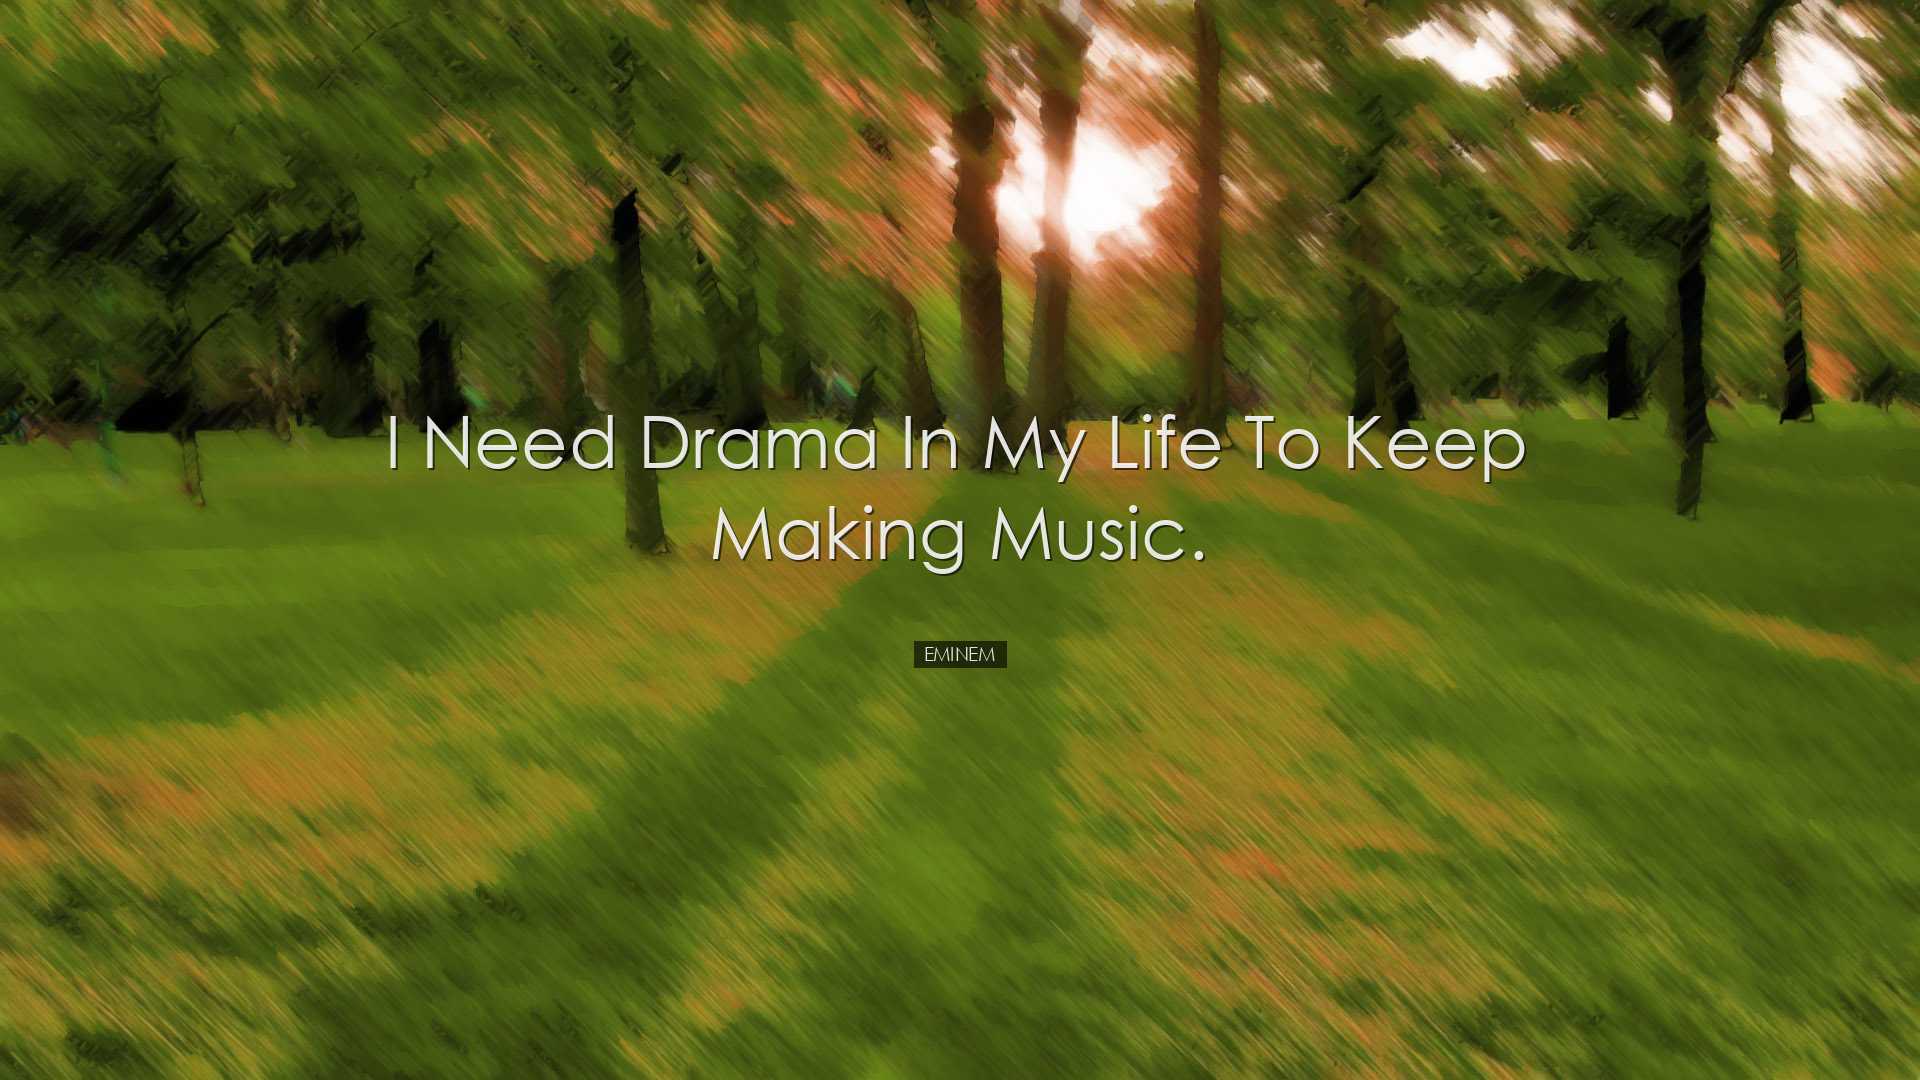 I need drama in my life to keep making music. - Eminem